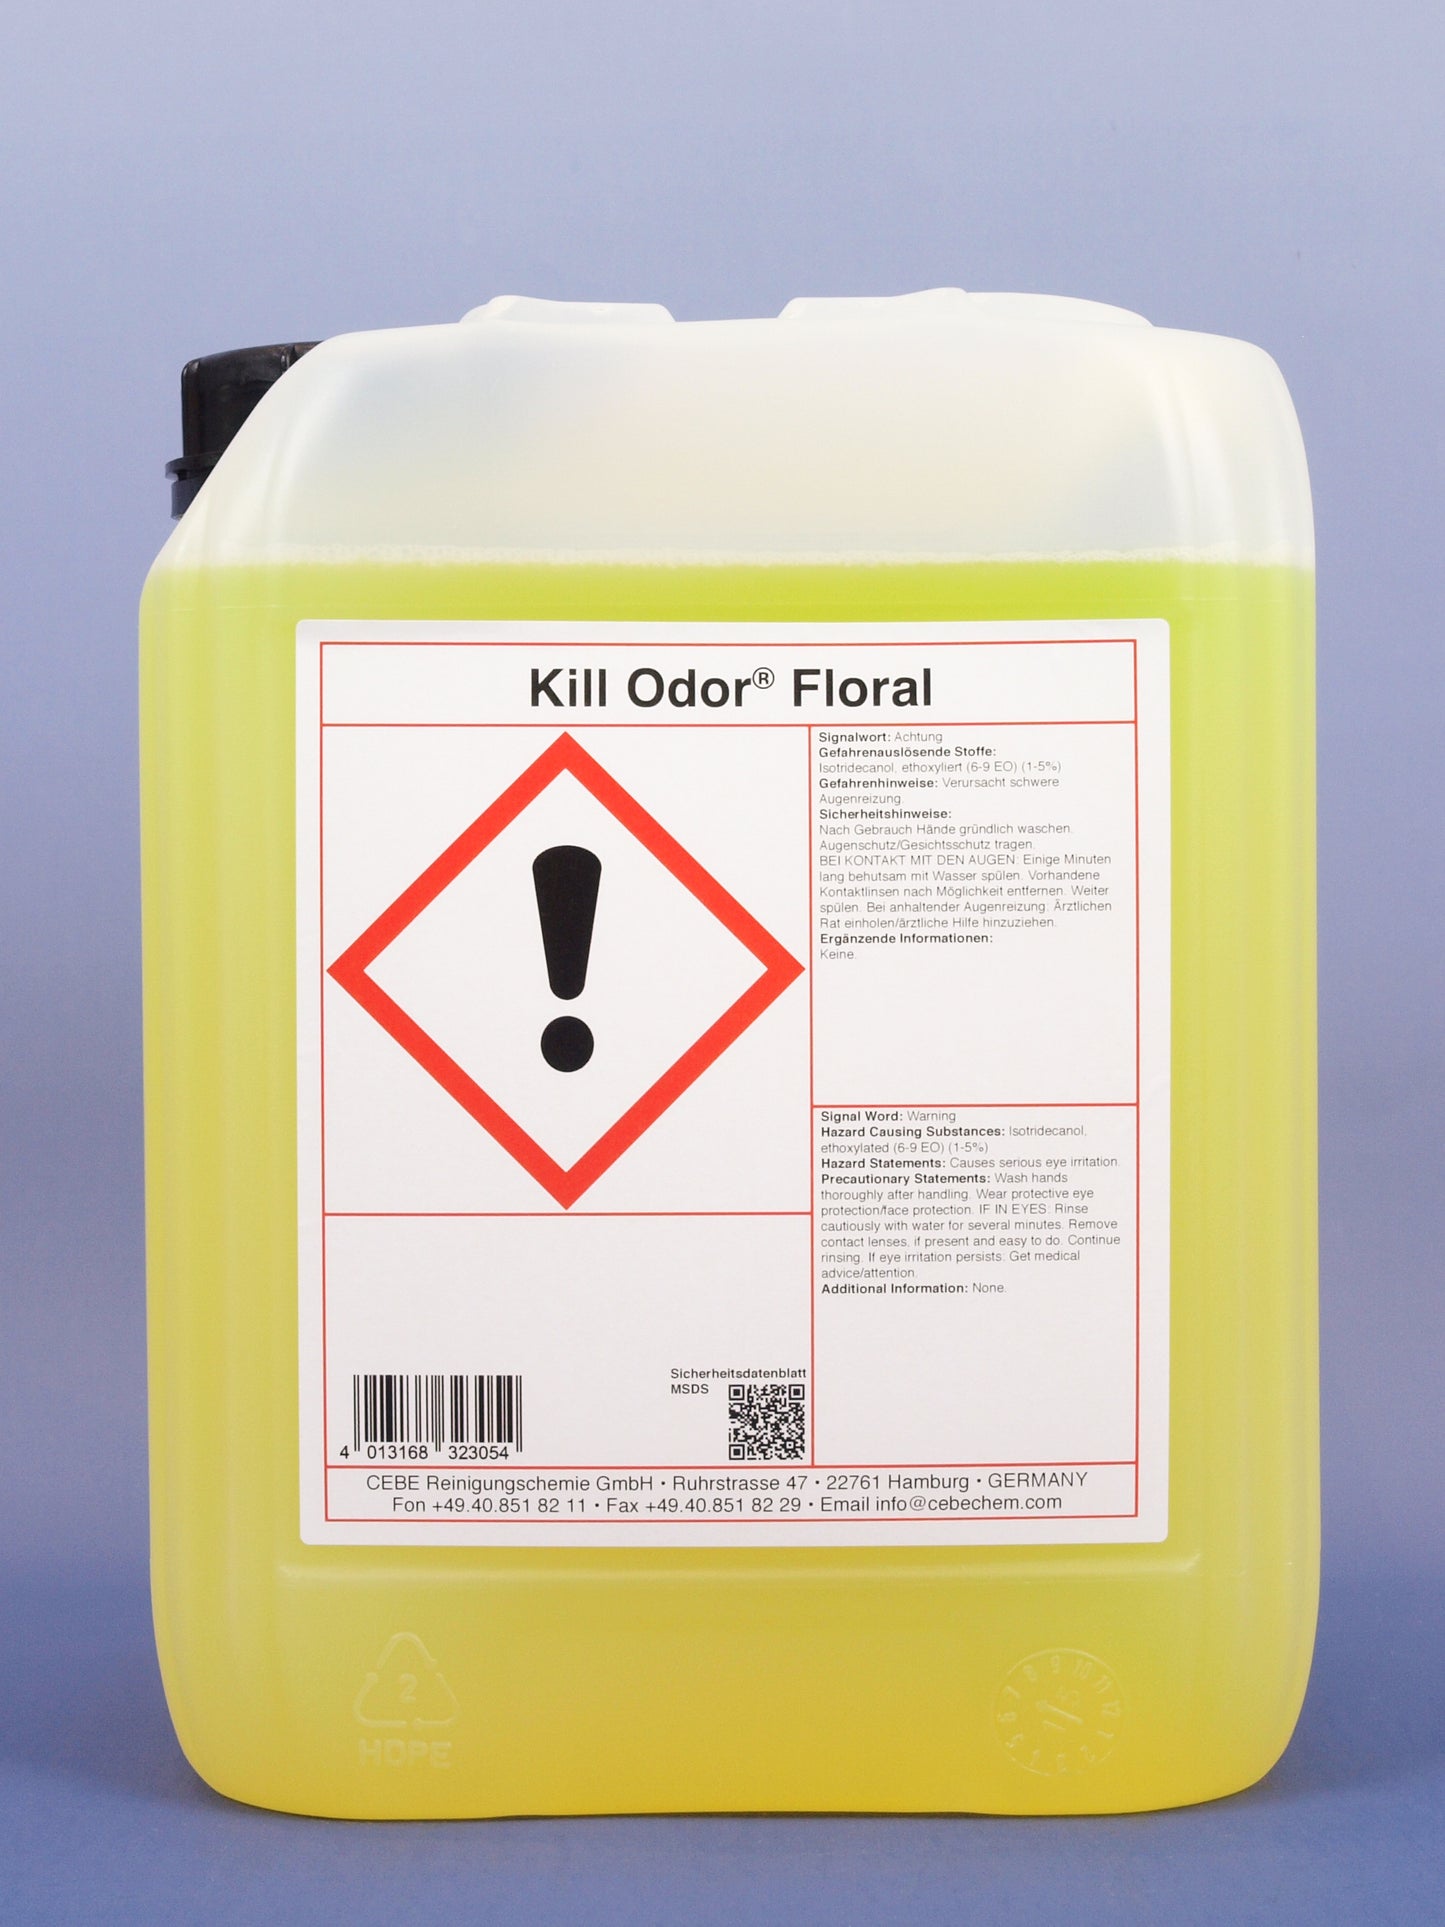 Kill Odor® Floral